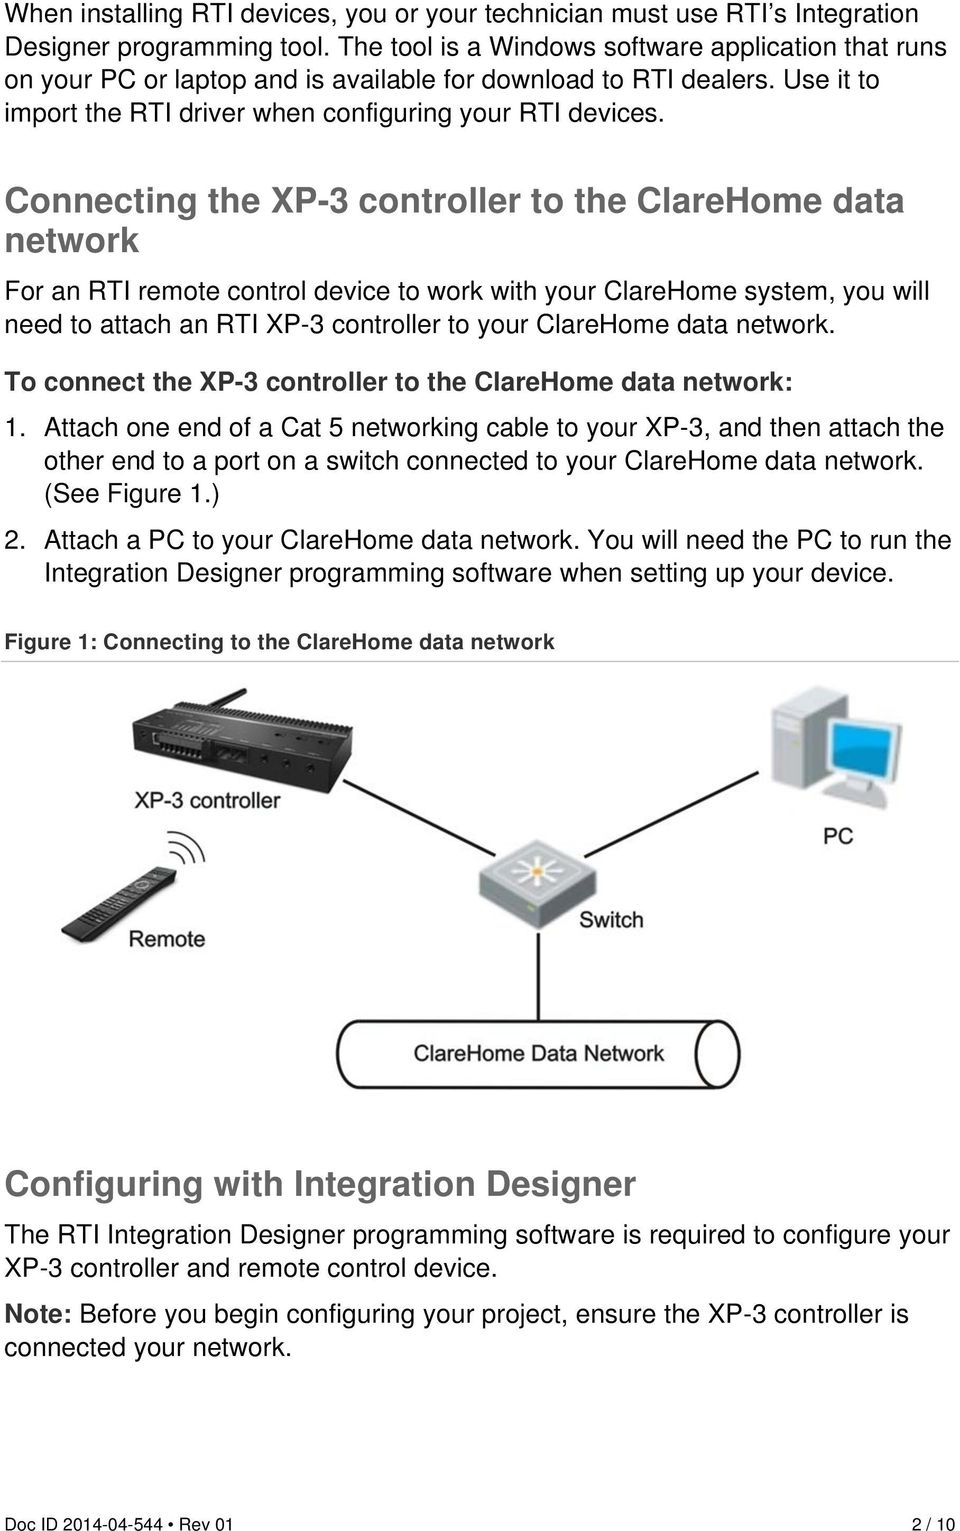 rti integration designer download